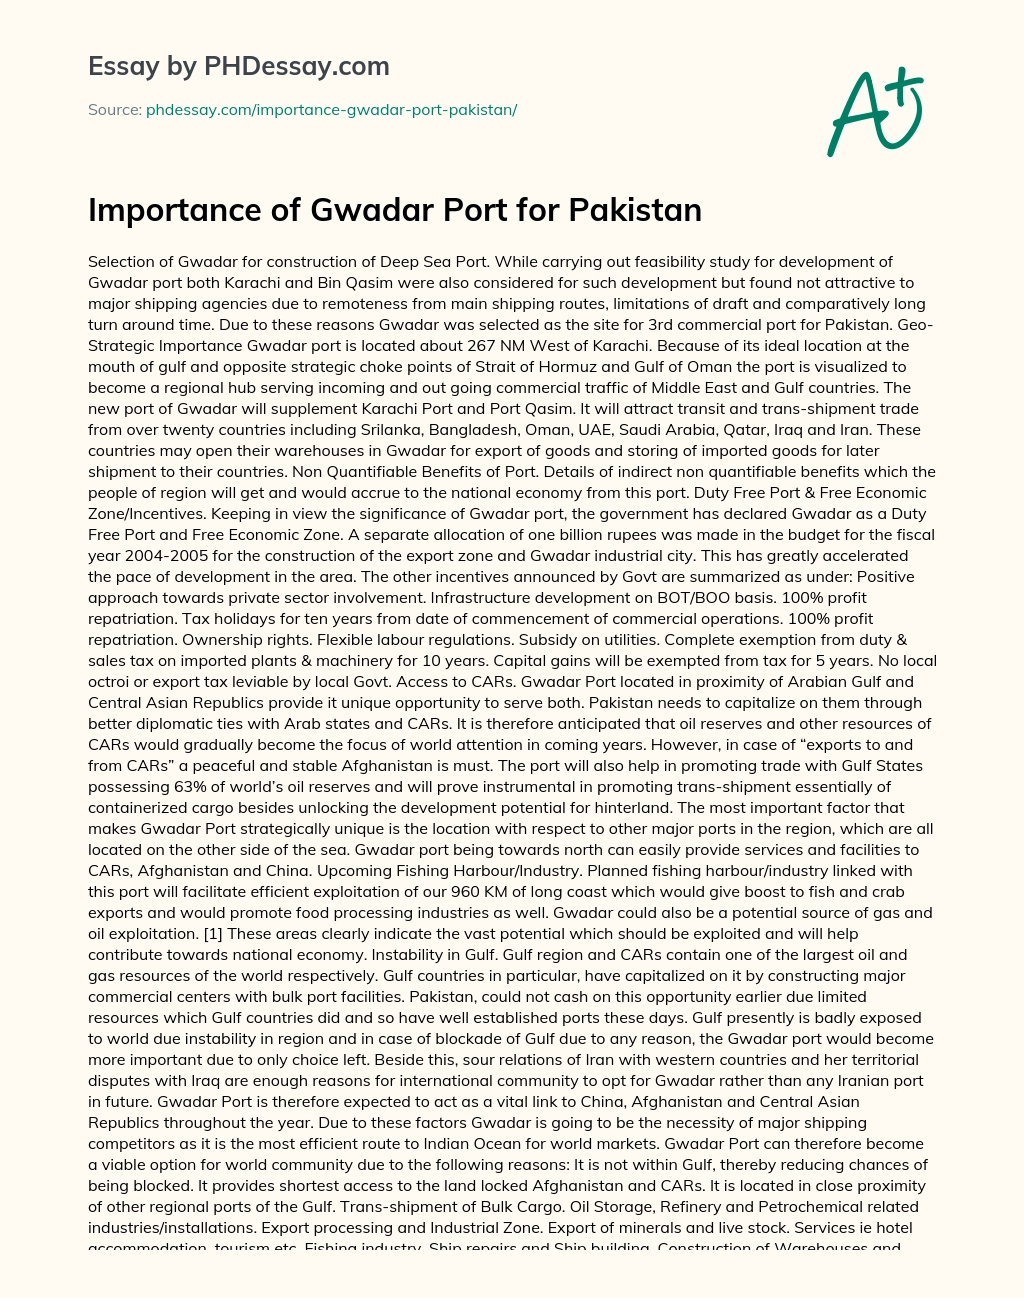 Importance of Gwadar Port for Pakistan essay